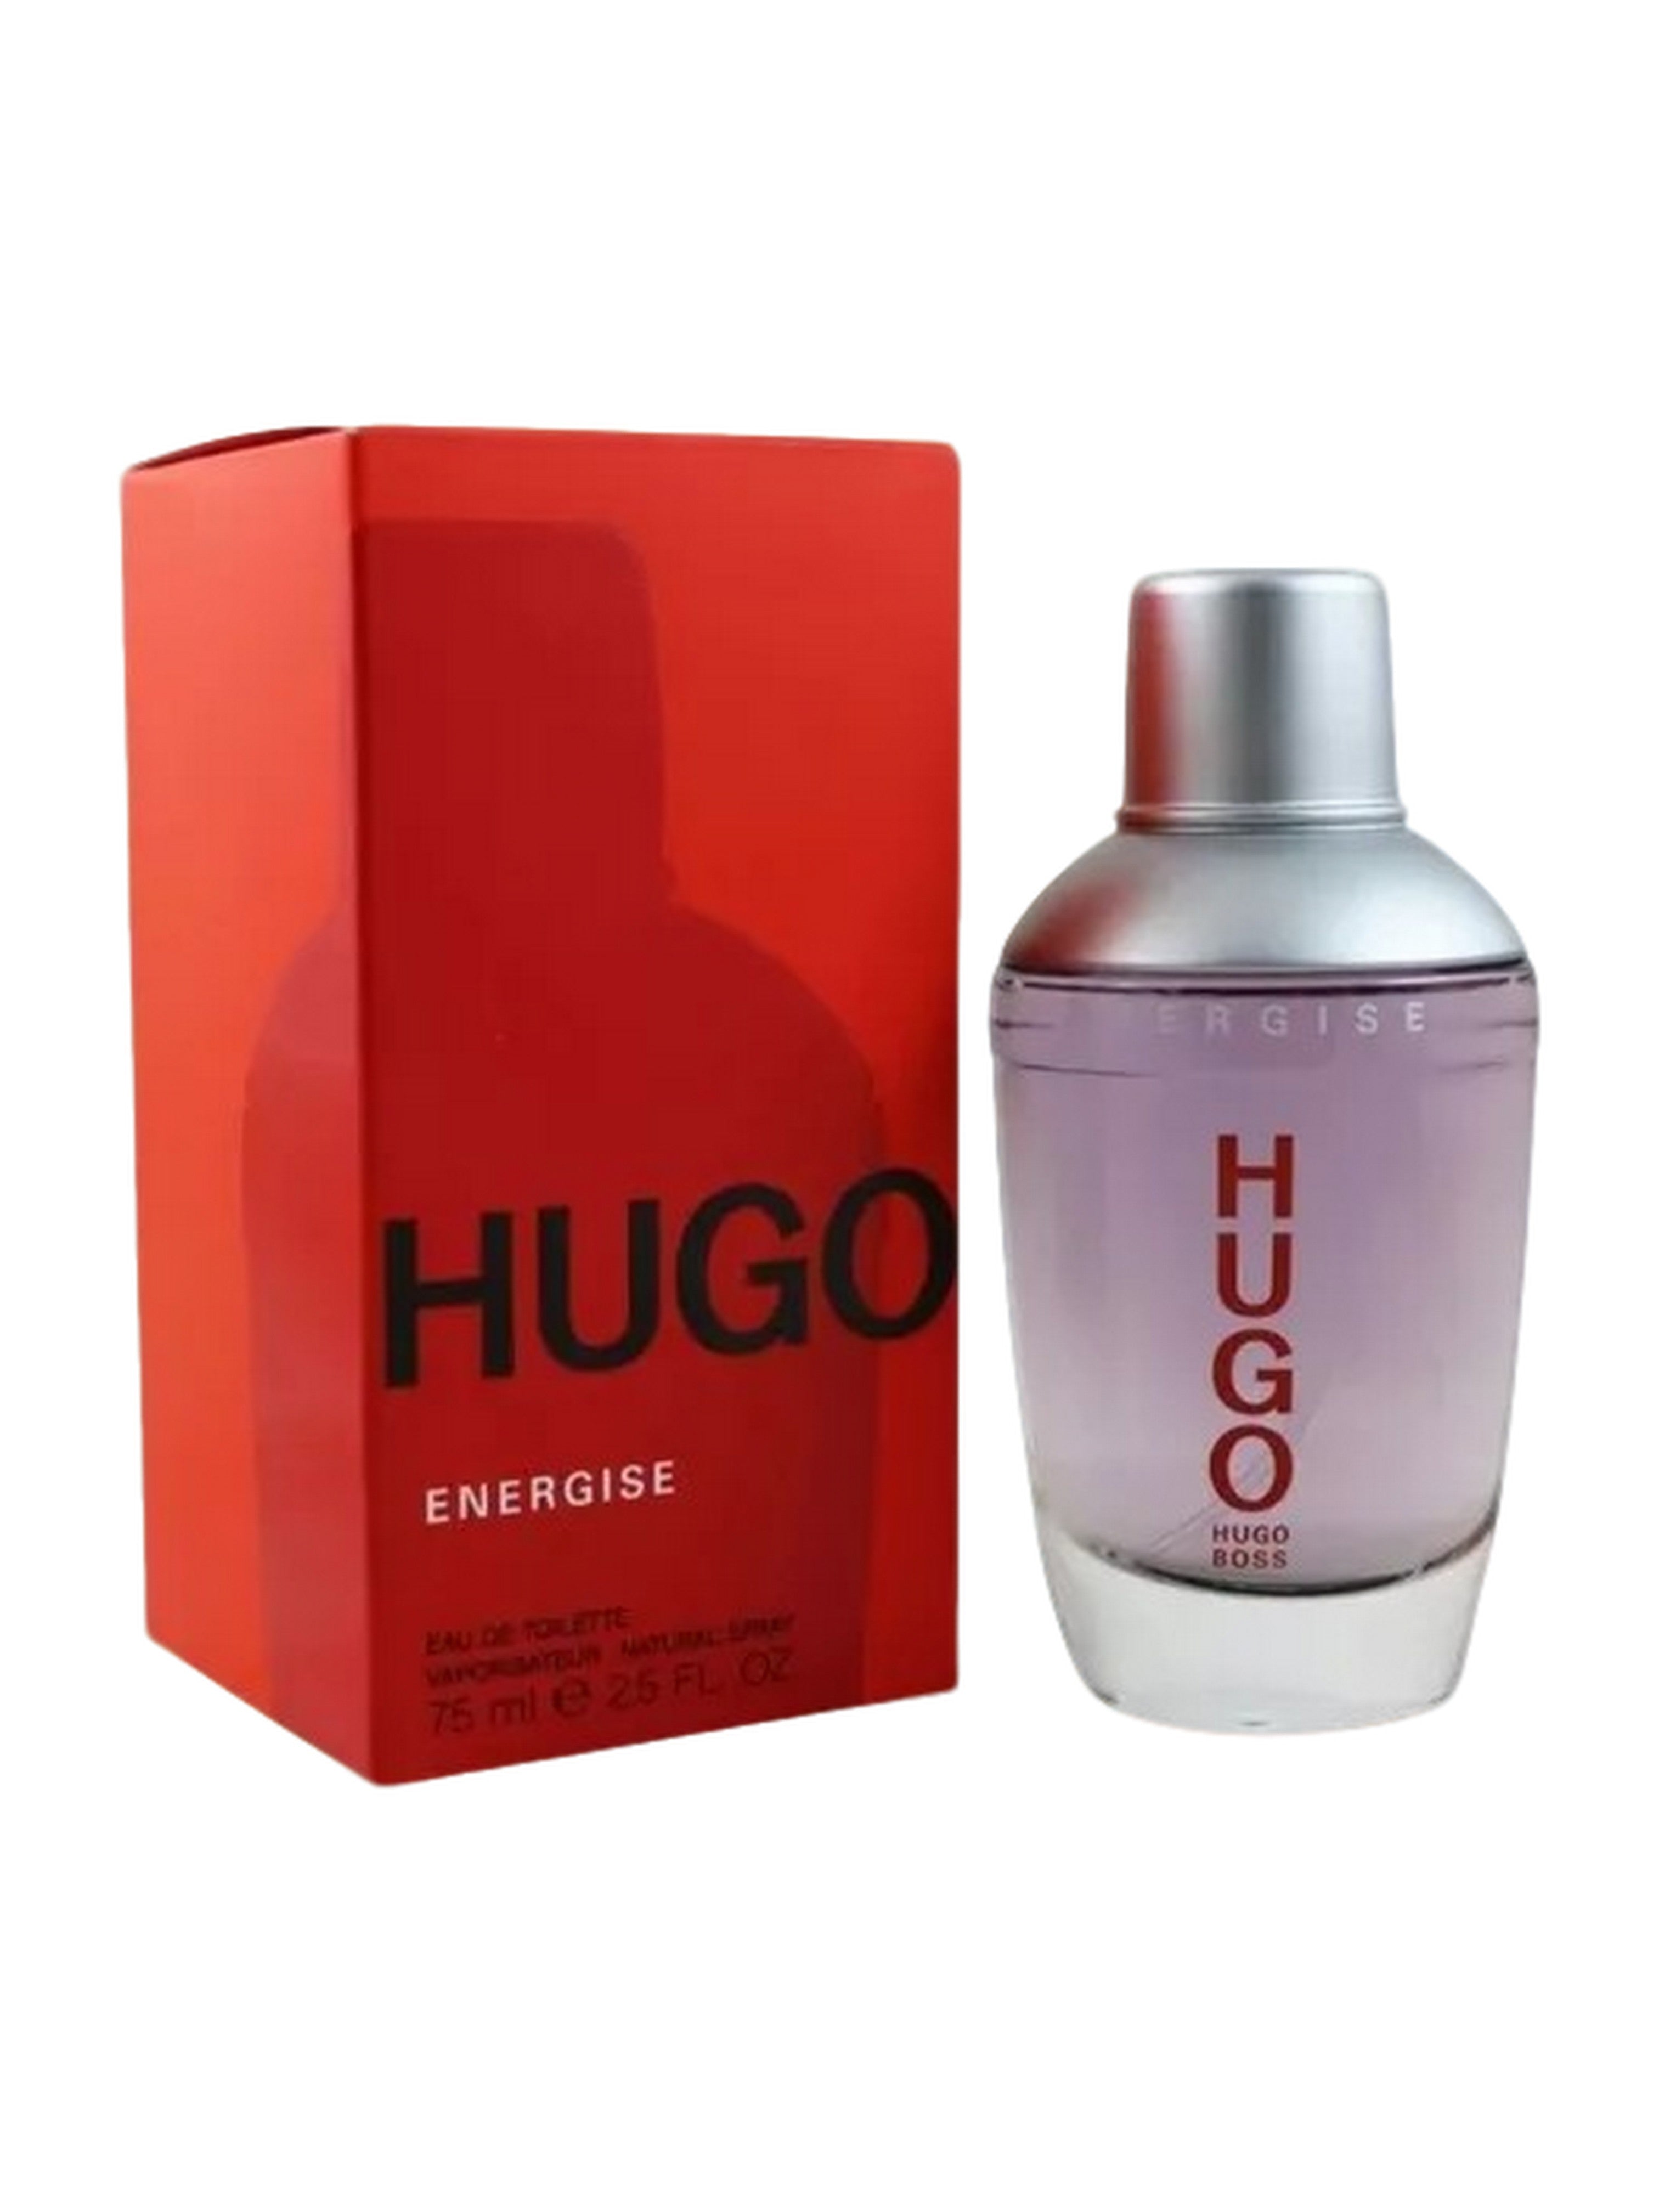 Perfume Hugo Boss